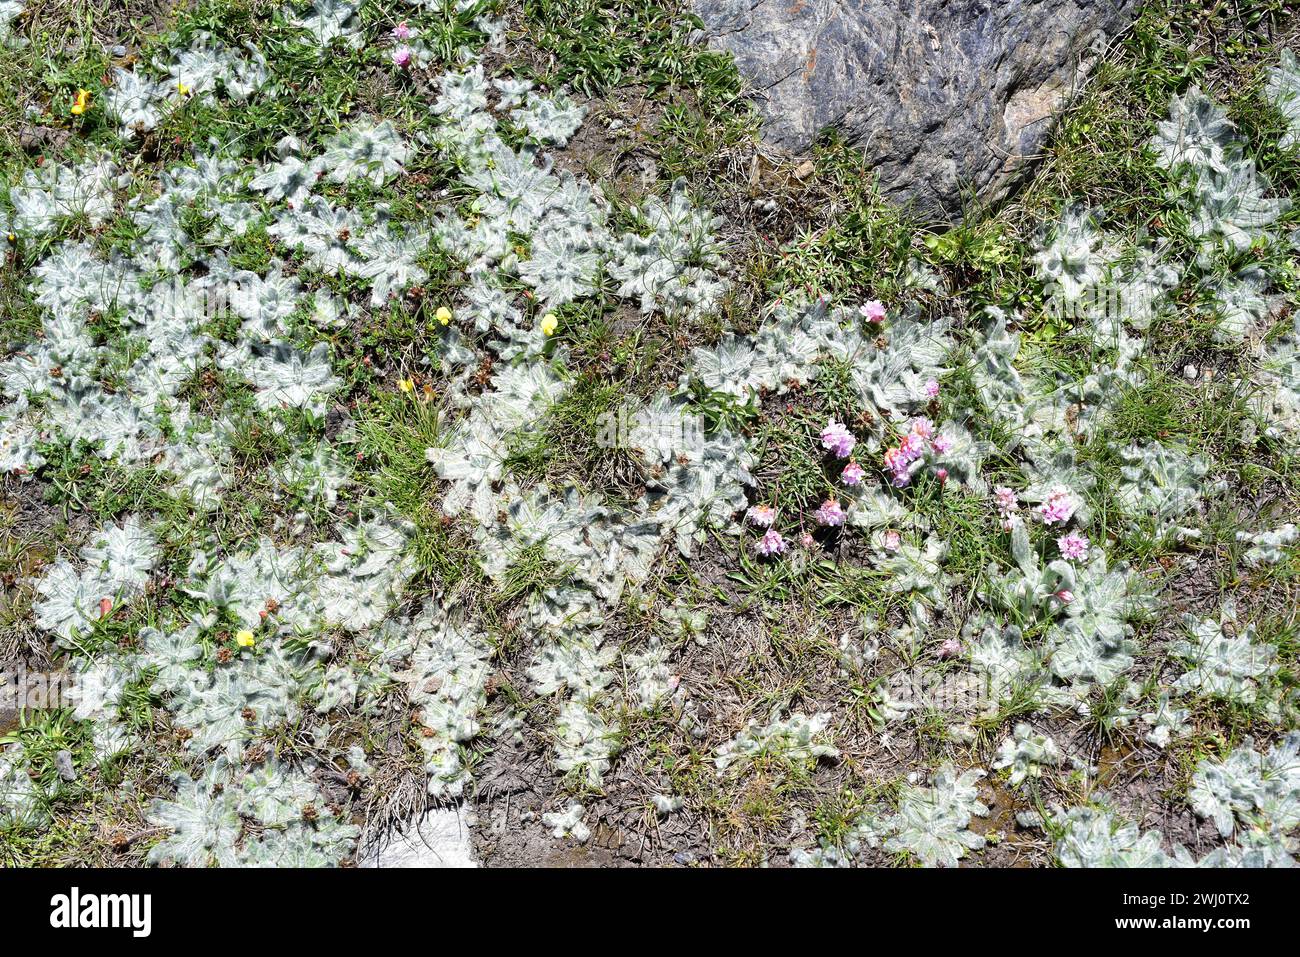 Estrella de las nieves (Plantago nivalis) is a perennial herb endemic to Sierra Nevada. At right Armeria splendens (pink flowers). This photo was take Stock Photo